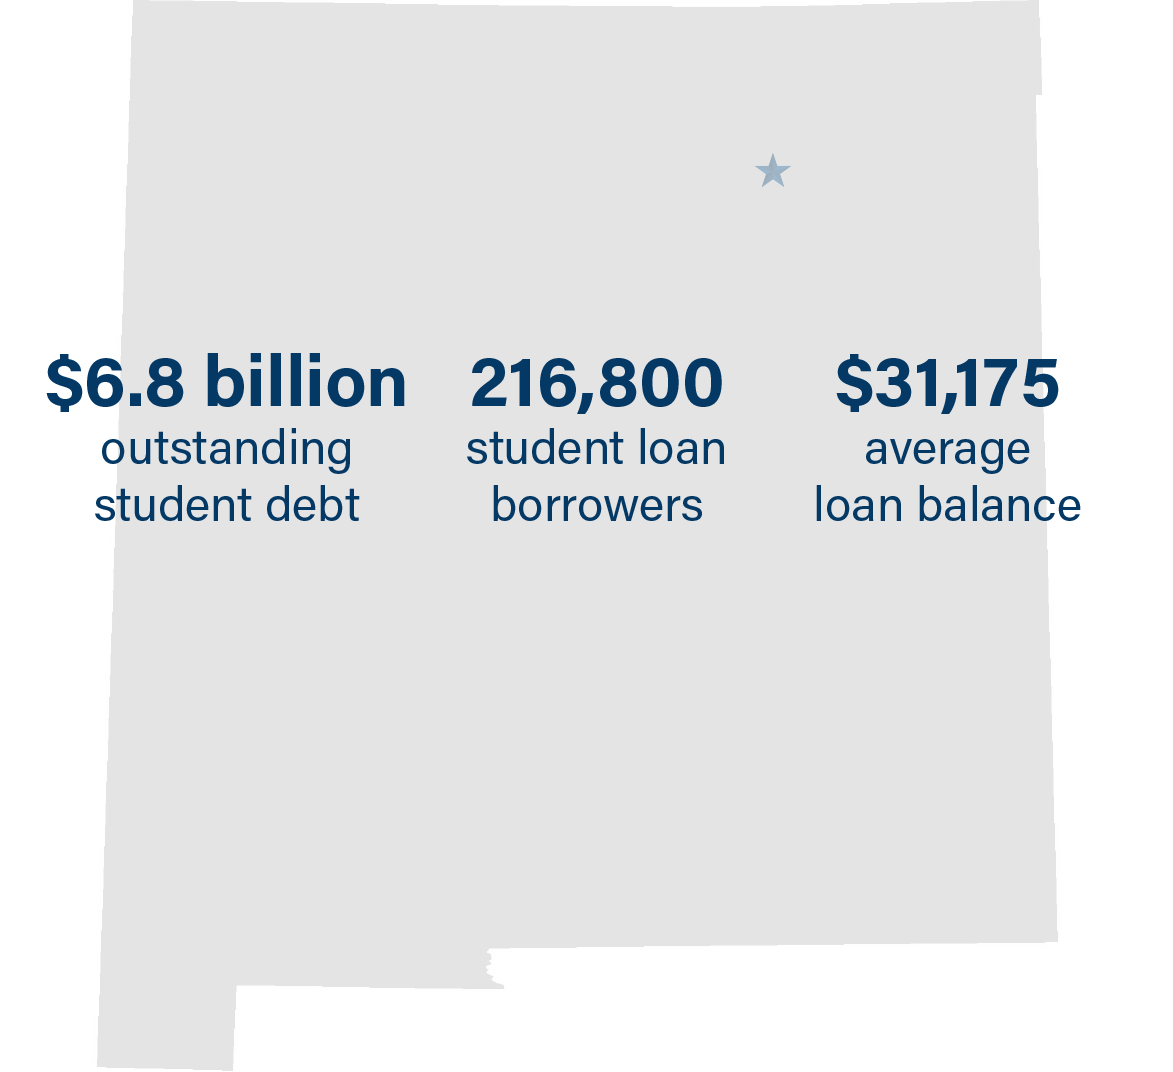 New Mexico student debt:
6.8 billion in outstanding debt
216,800 student loan borrowers
31,175 dollars in average loan balance